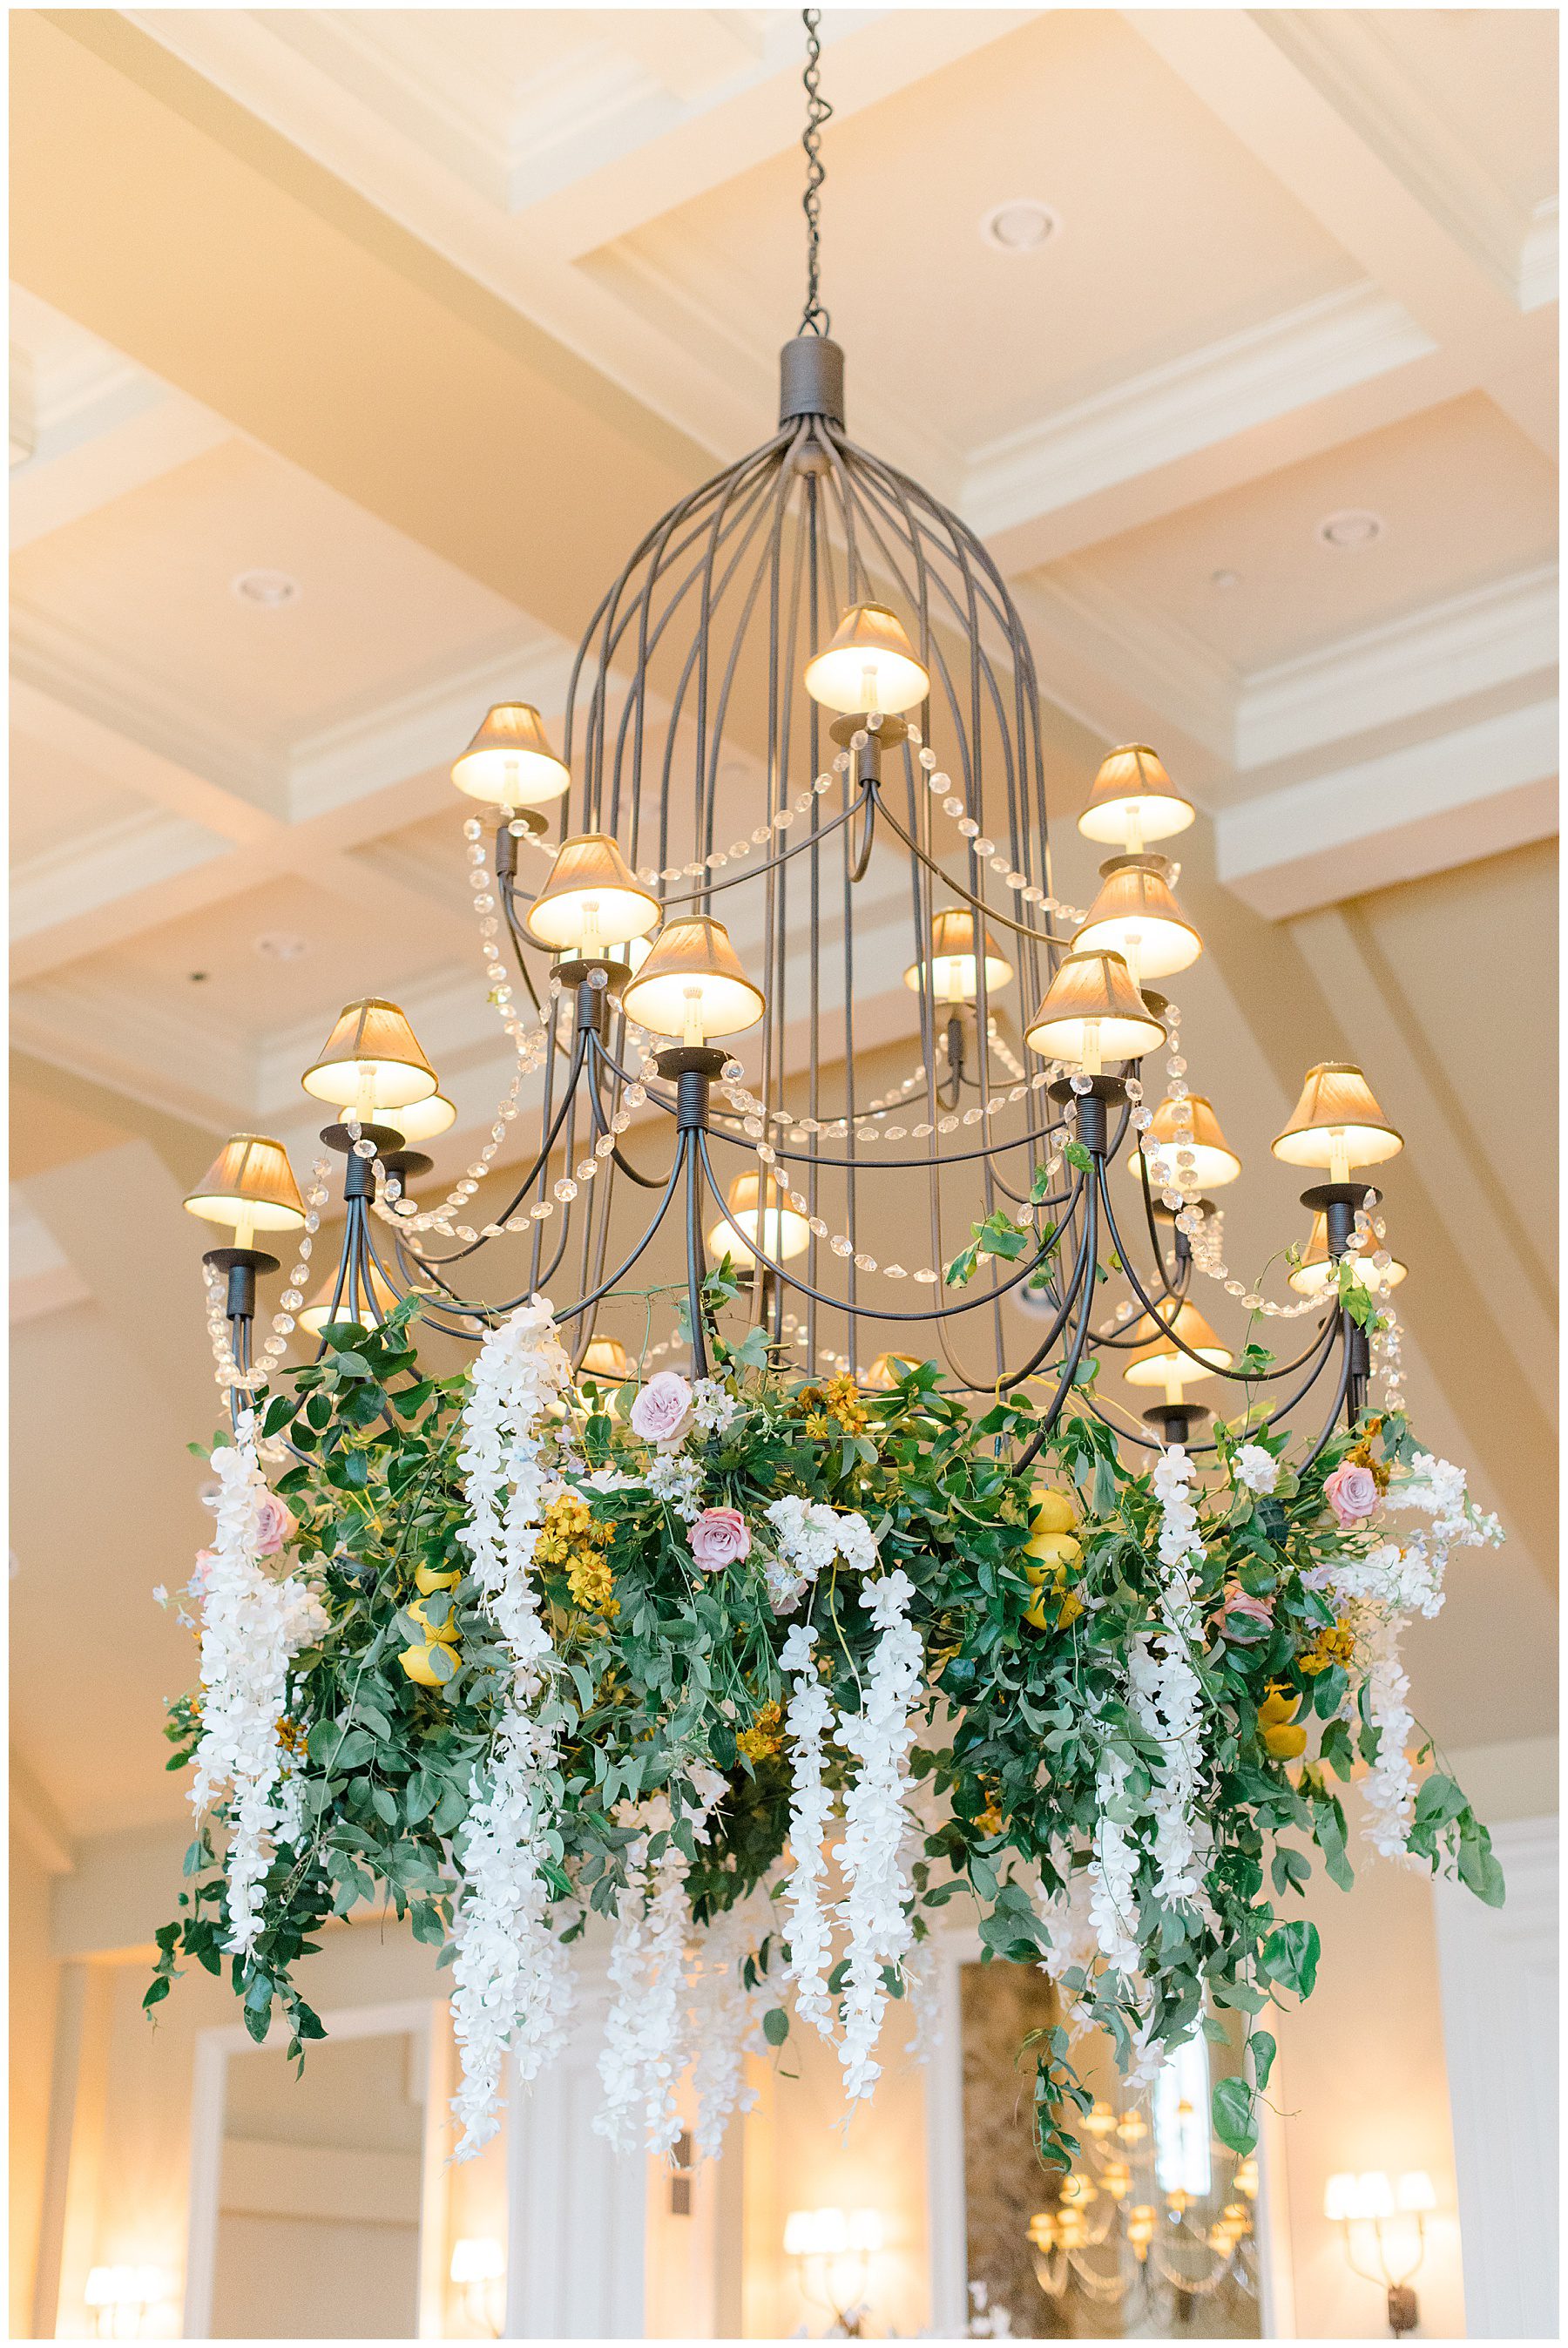 grand chandelier at Ryland Inn Grand Ballroom Wedding reception